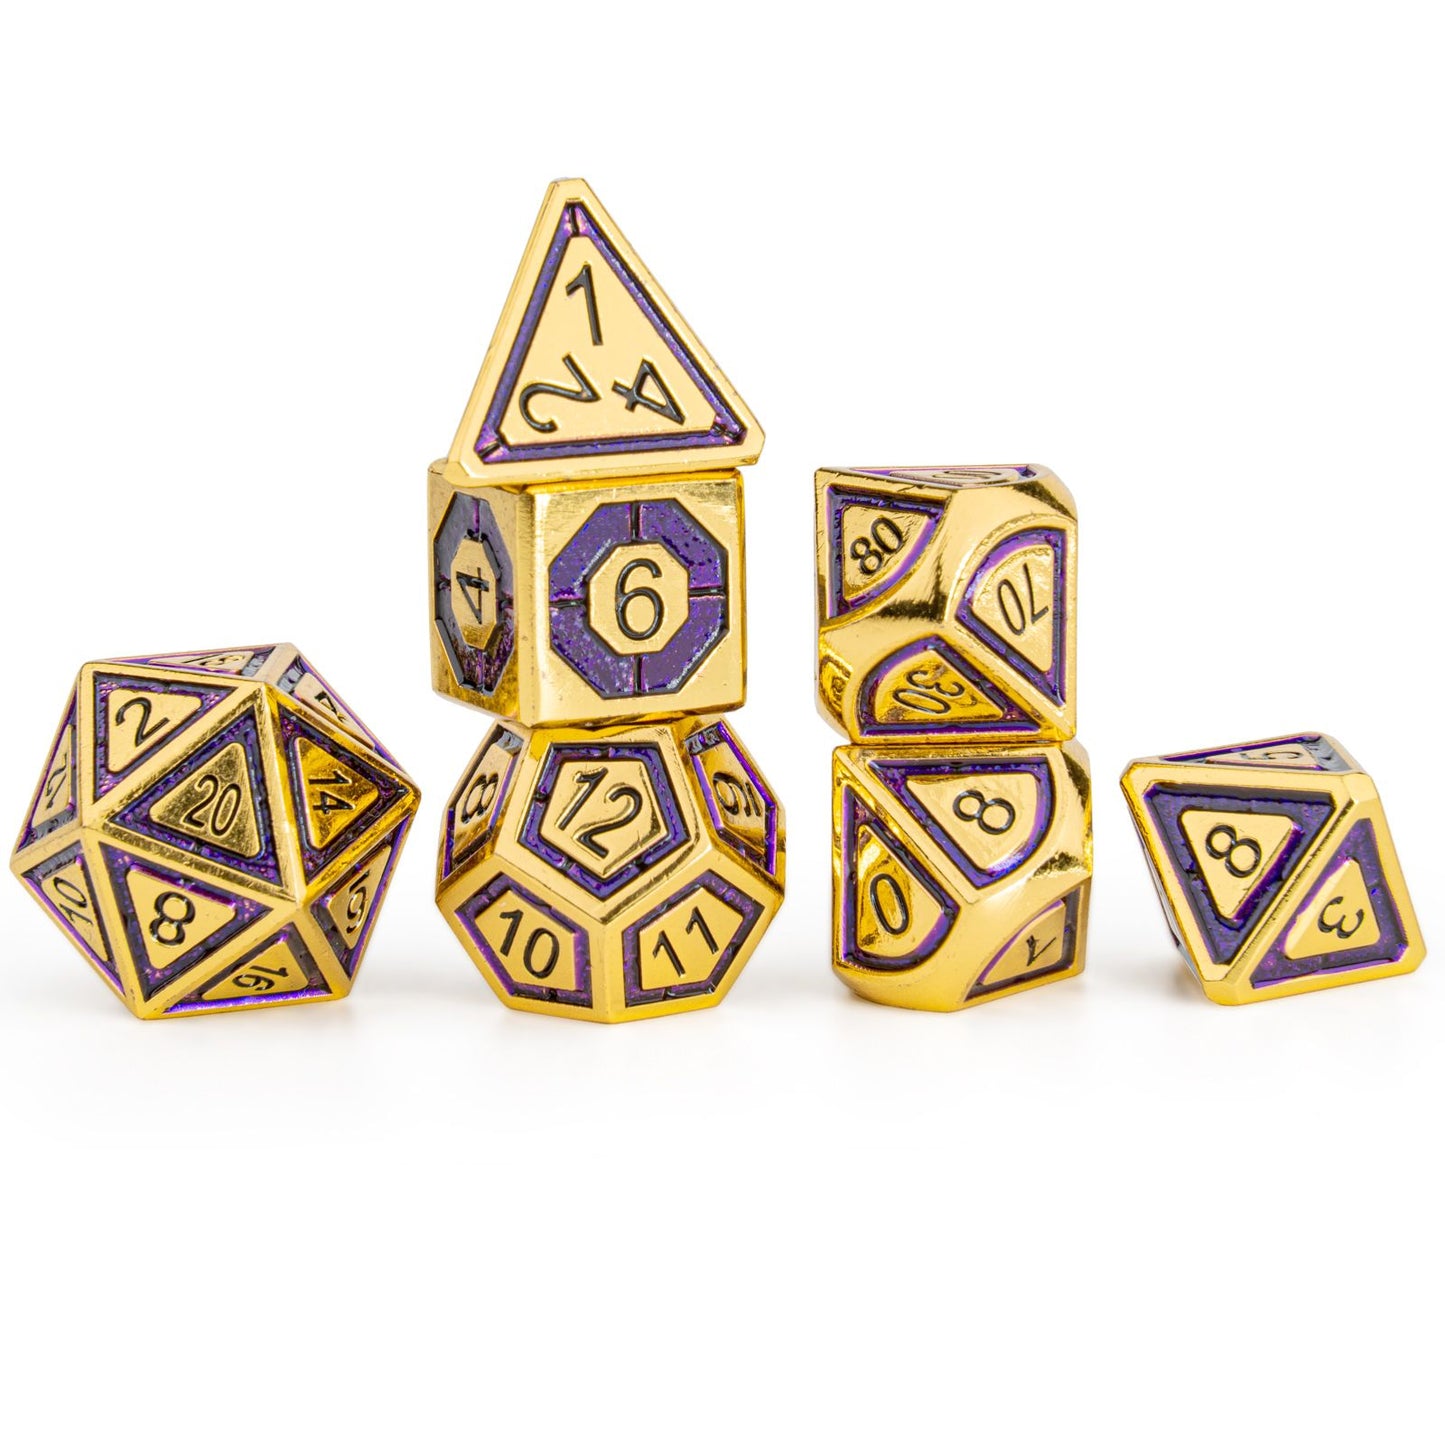 Leyline Gold purple enamel metal D&D dice for RPG gaming